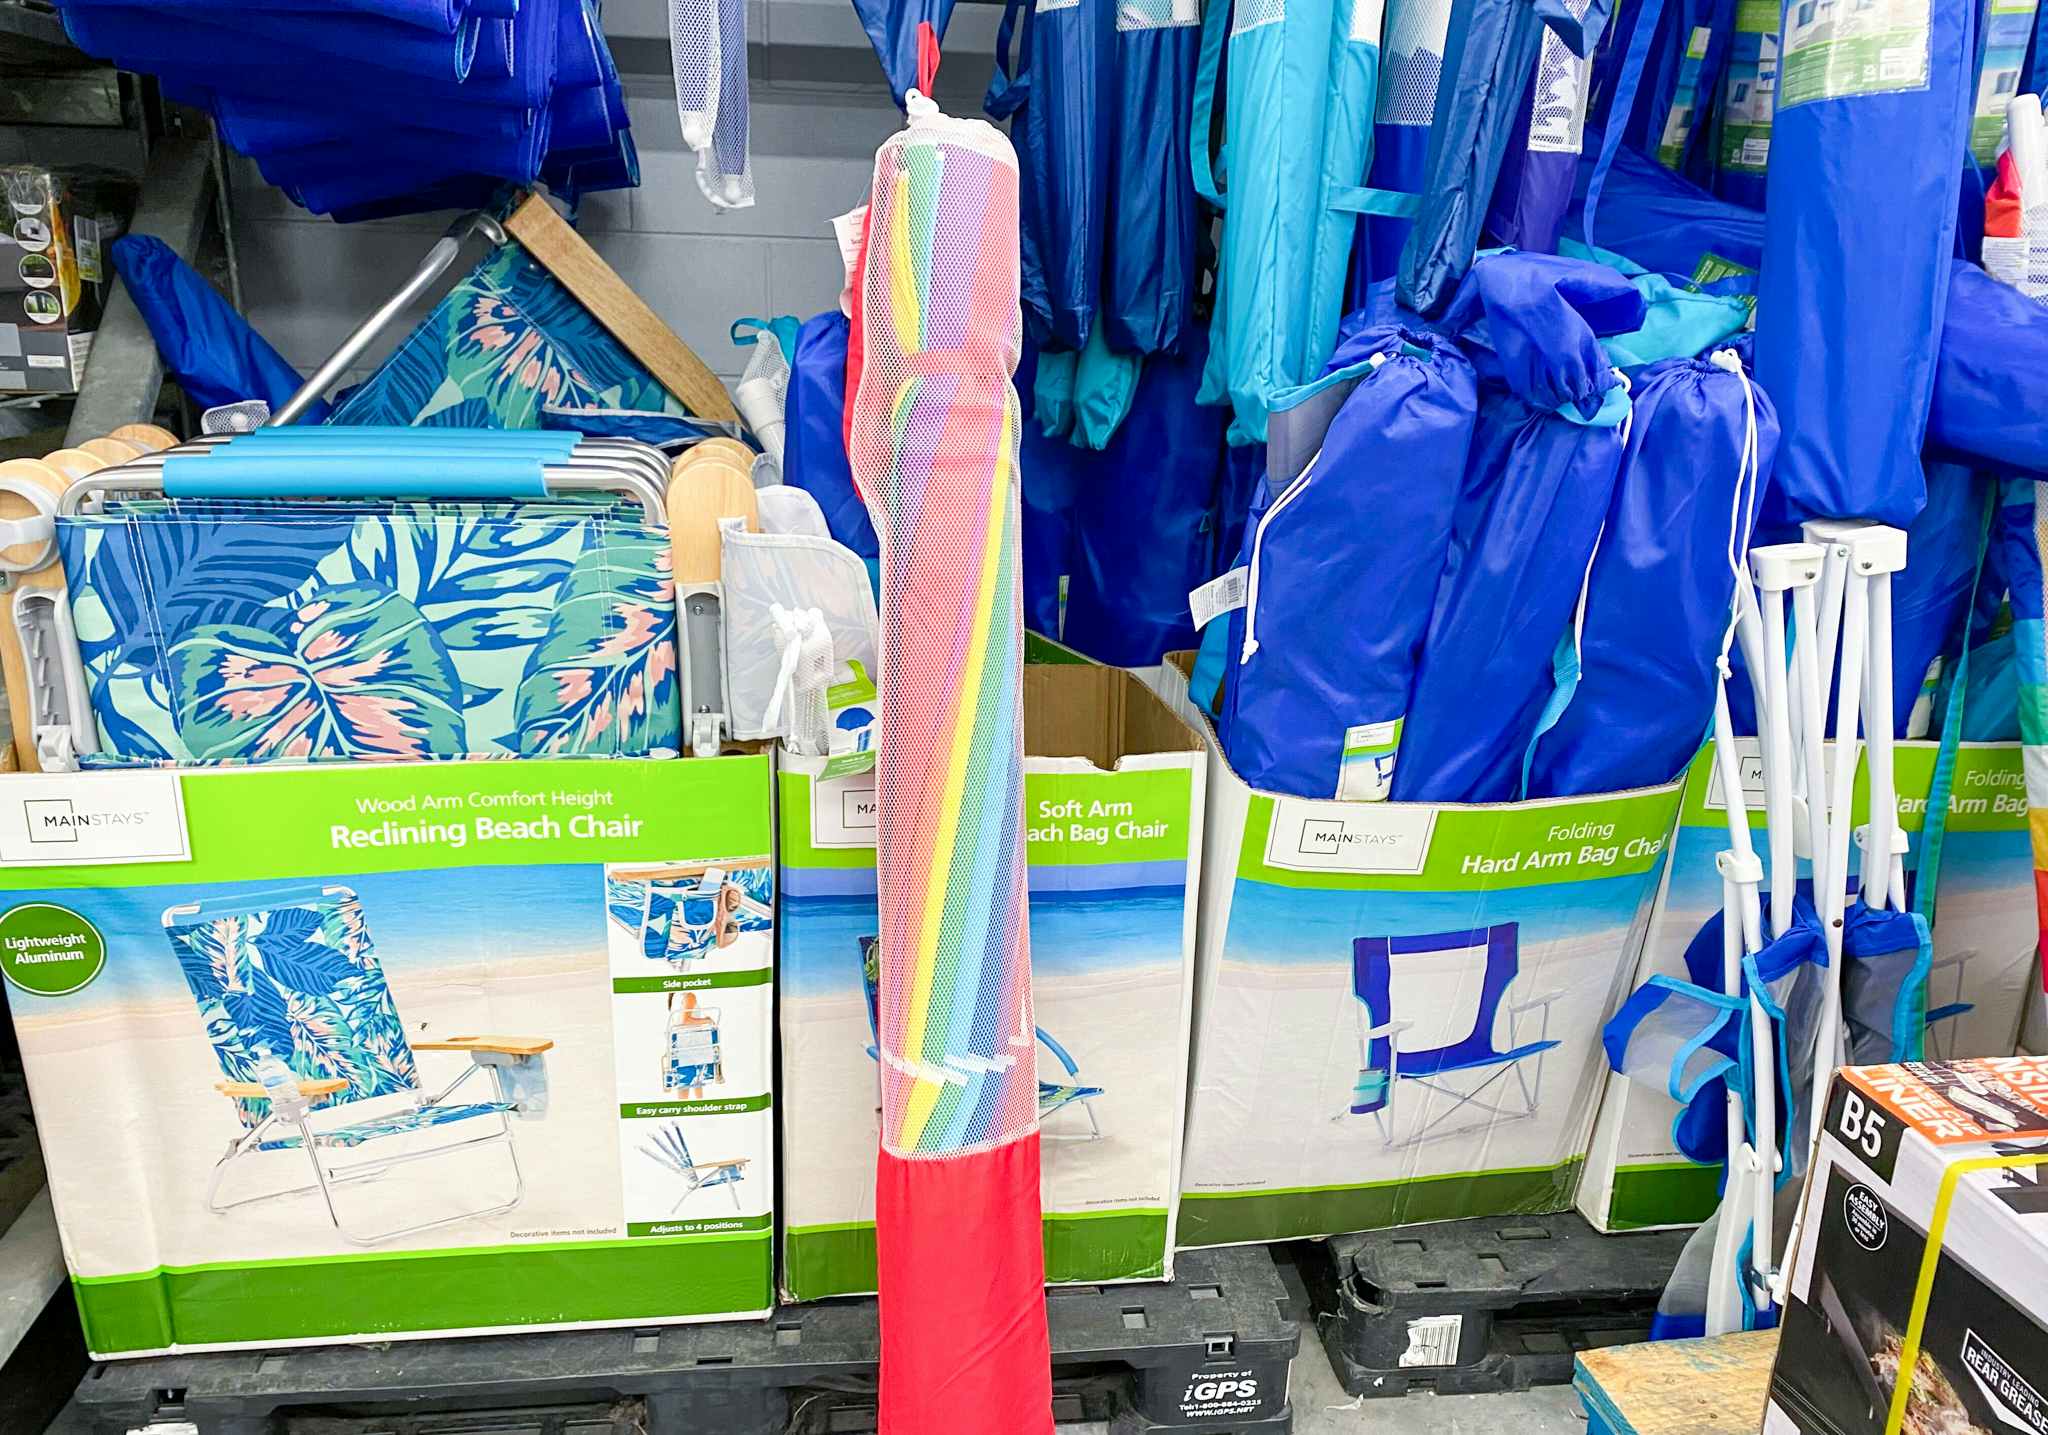 Mainstays 8-Foot Beach Umbrella in aisle at Walmart